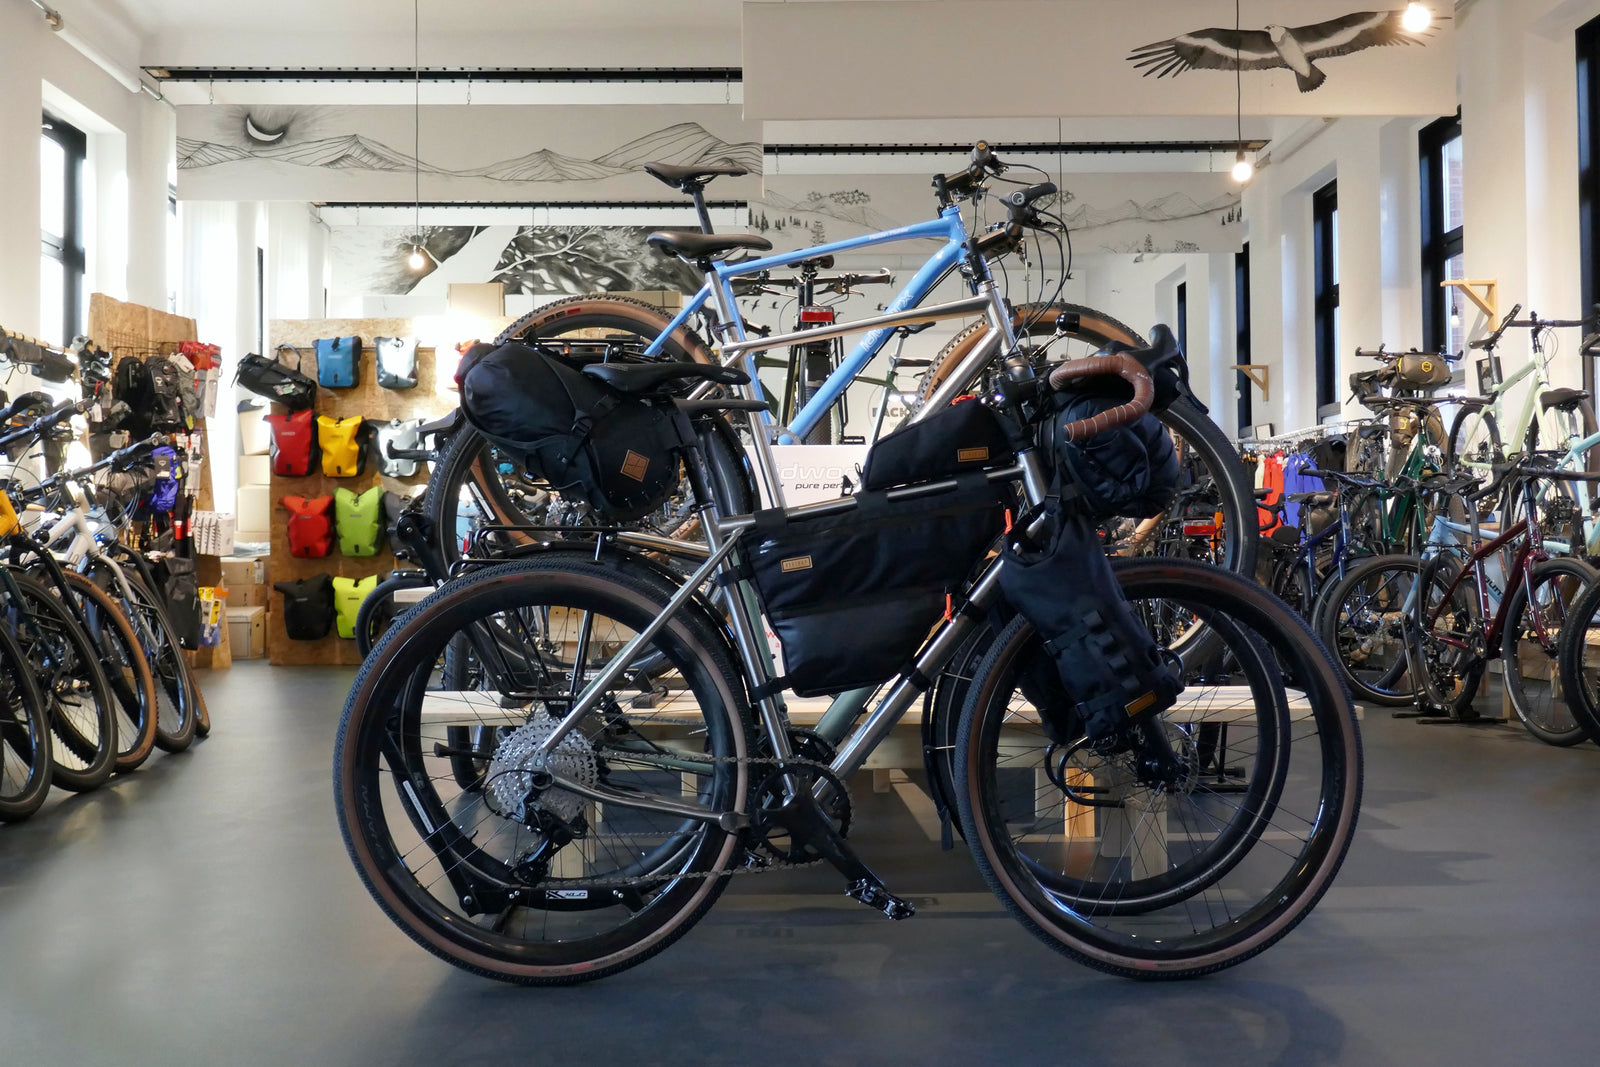 Shop Focus: Bikepacking Belgium